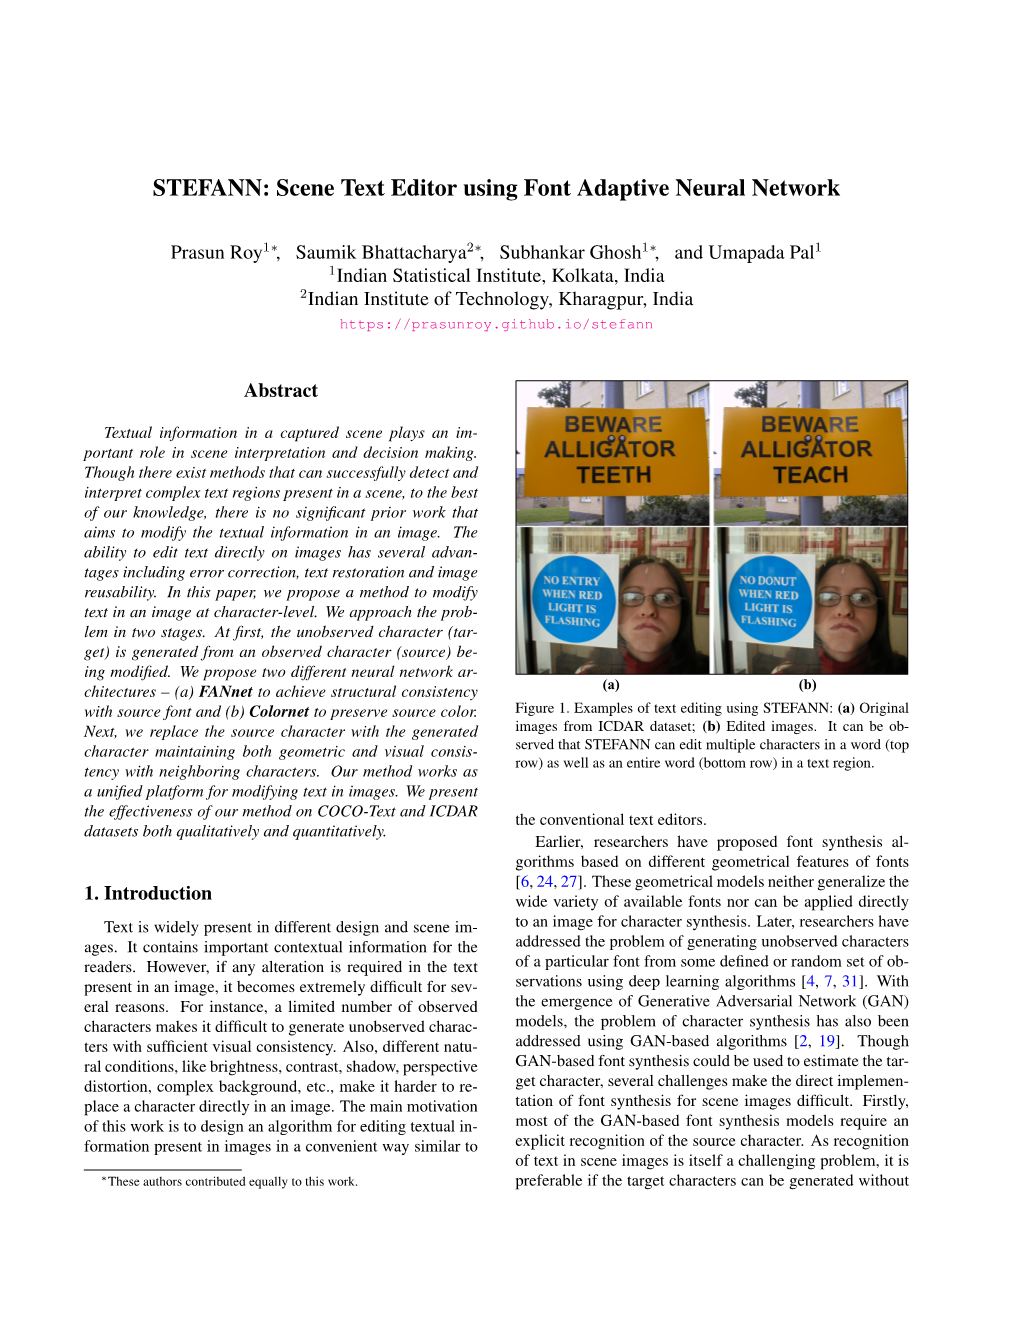 STEFANN: Scene Text Editor Using Font Adaptive Neural Network